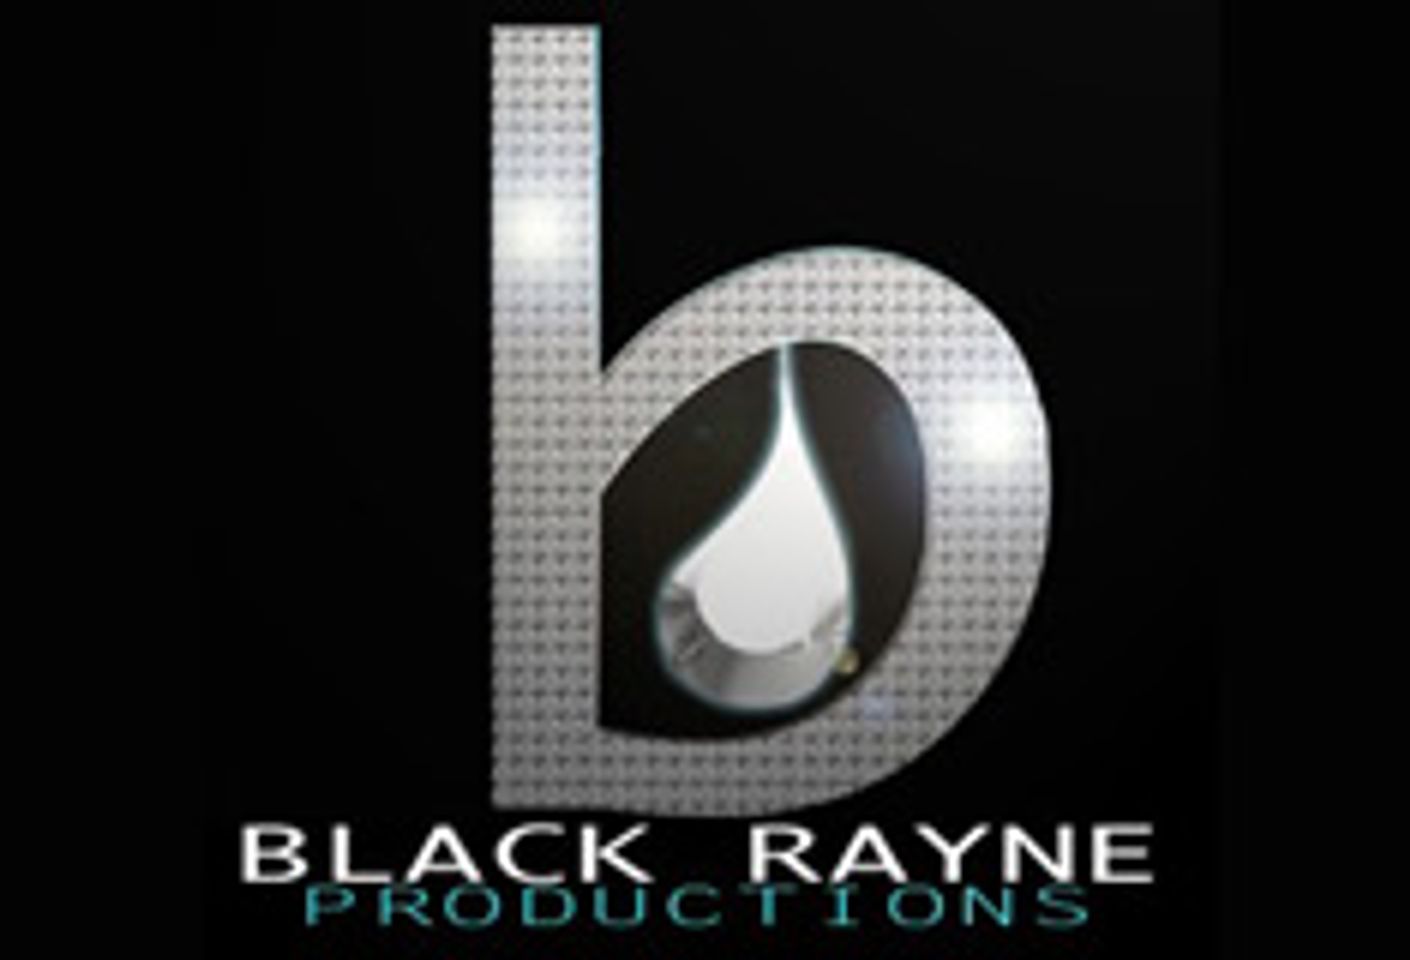 Black Rayne Partners with Urban X Awards